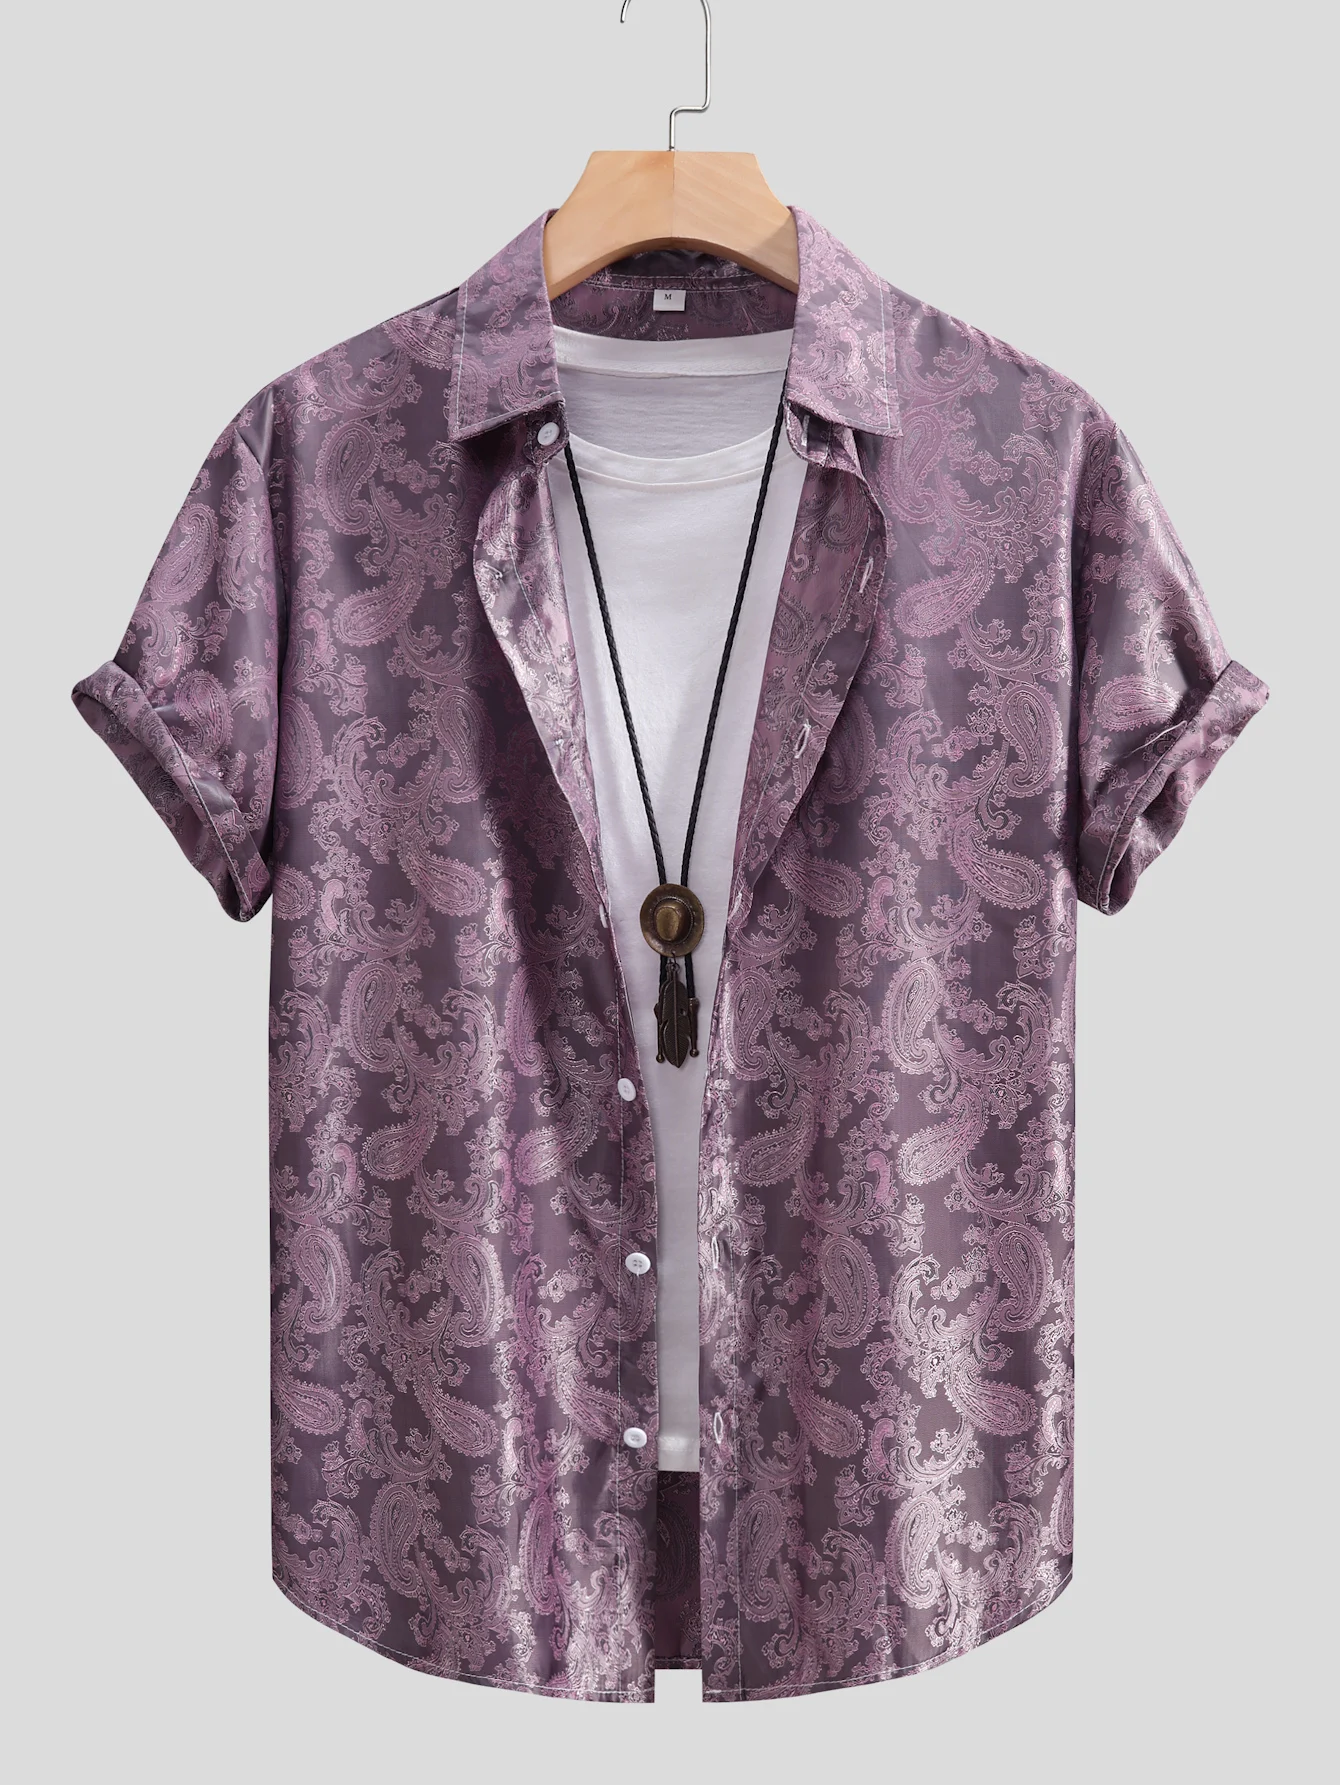 

Satin Shirts for Men Jacquard Rose Printed Silky Short Sleeve Shirt Summer Streetwear Button Blouse Tops Vintage Street Shirts